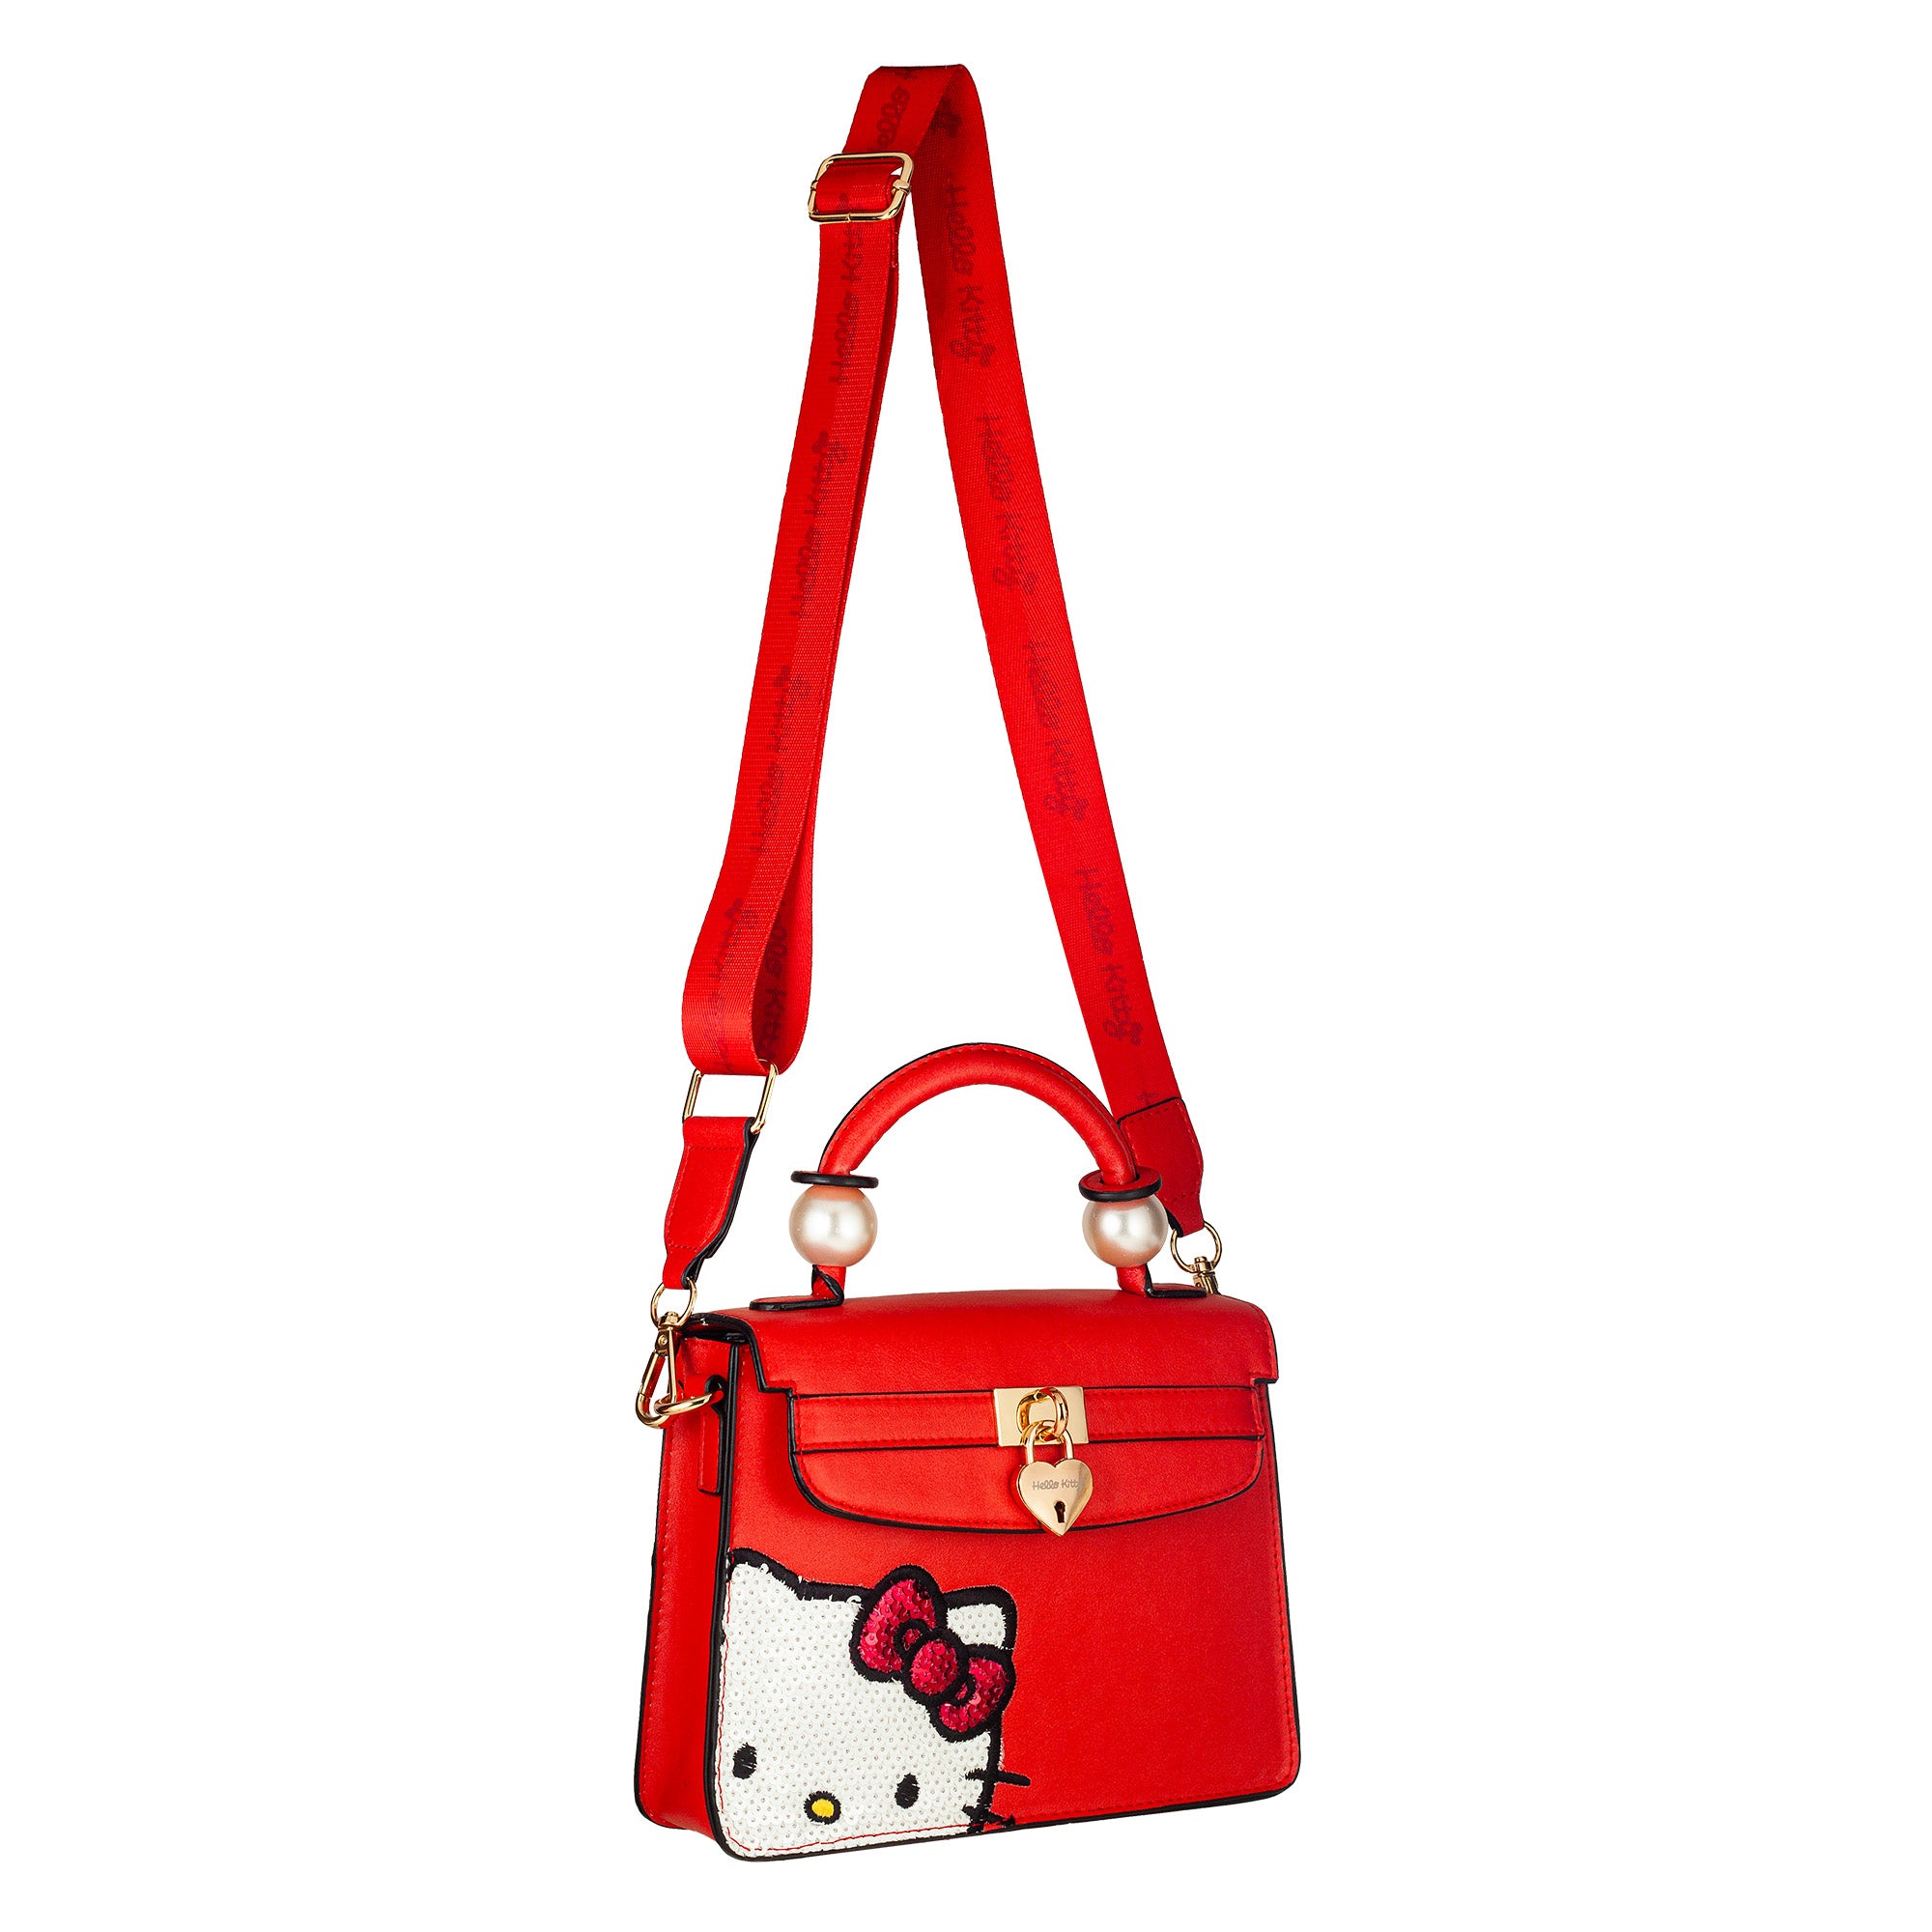 Danielle Nicole Hello Kitty Peek-A-Boo red satchel side view